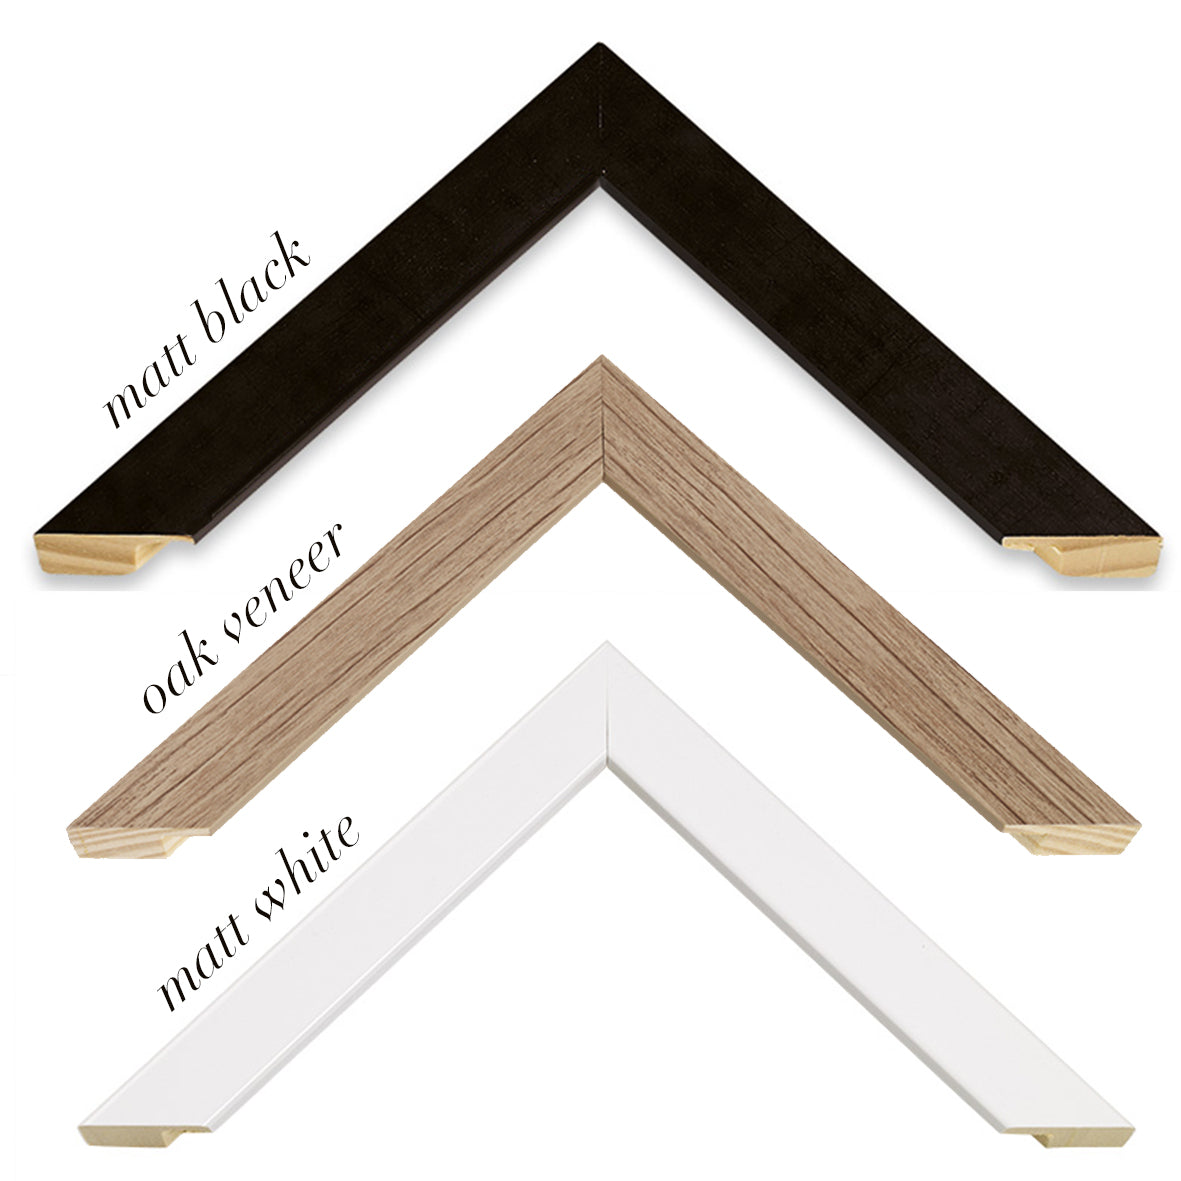 sample of frames in black, oak veneer and white